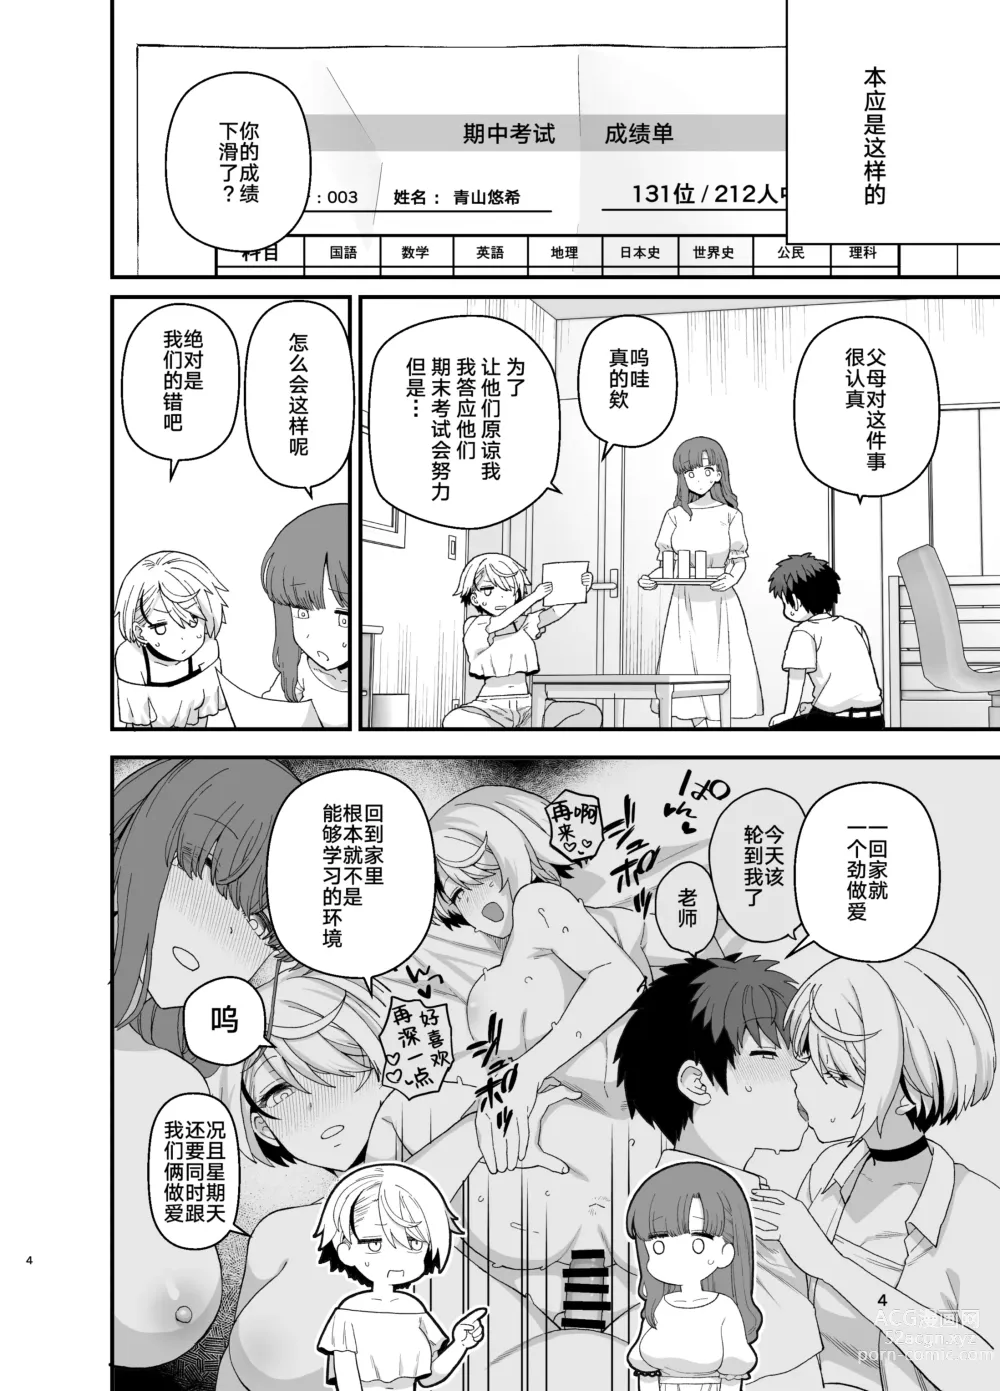 Page 6 of doujinshi Sentaku Kyouka Nijigenme